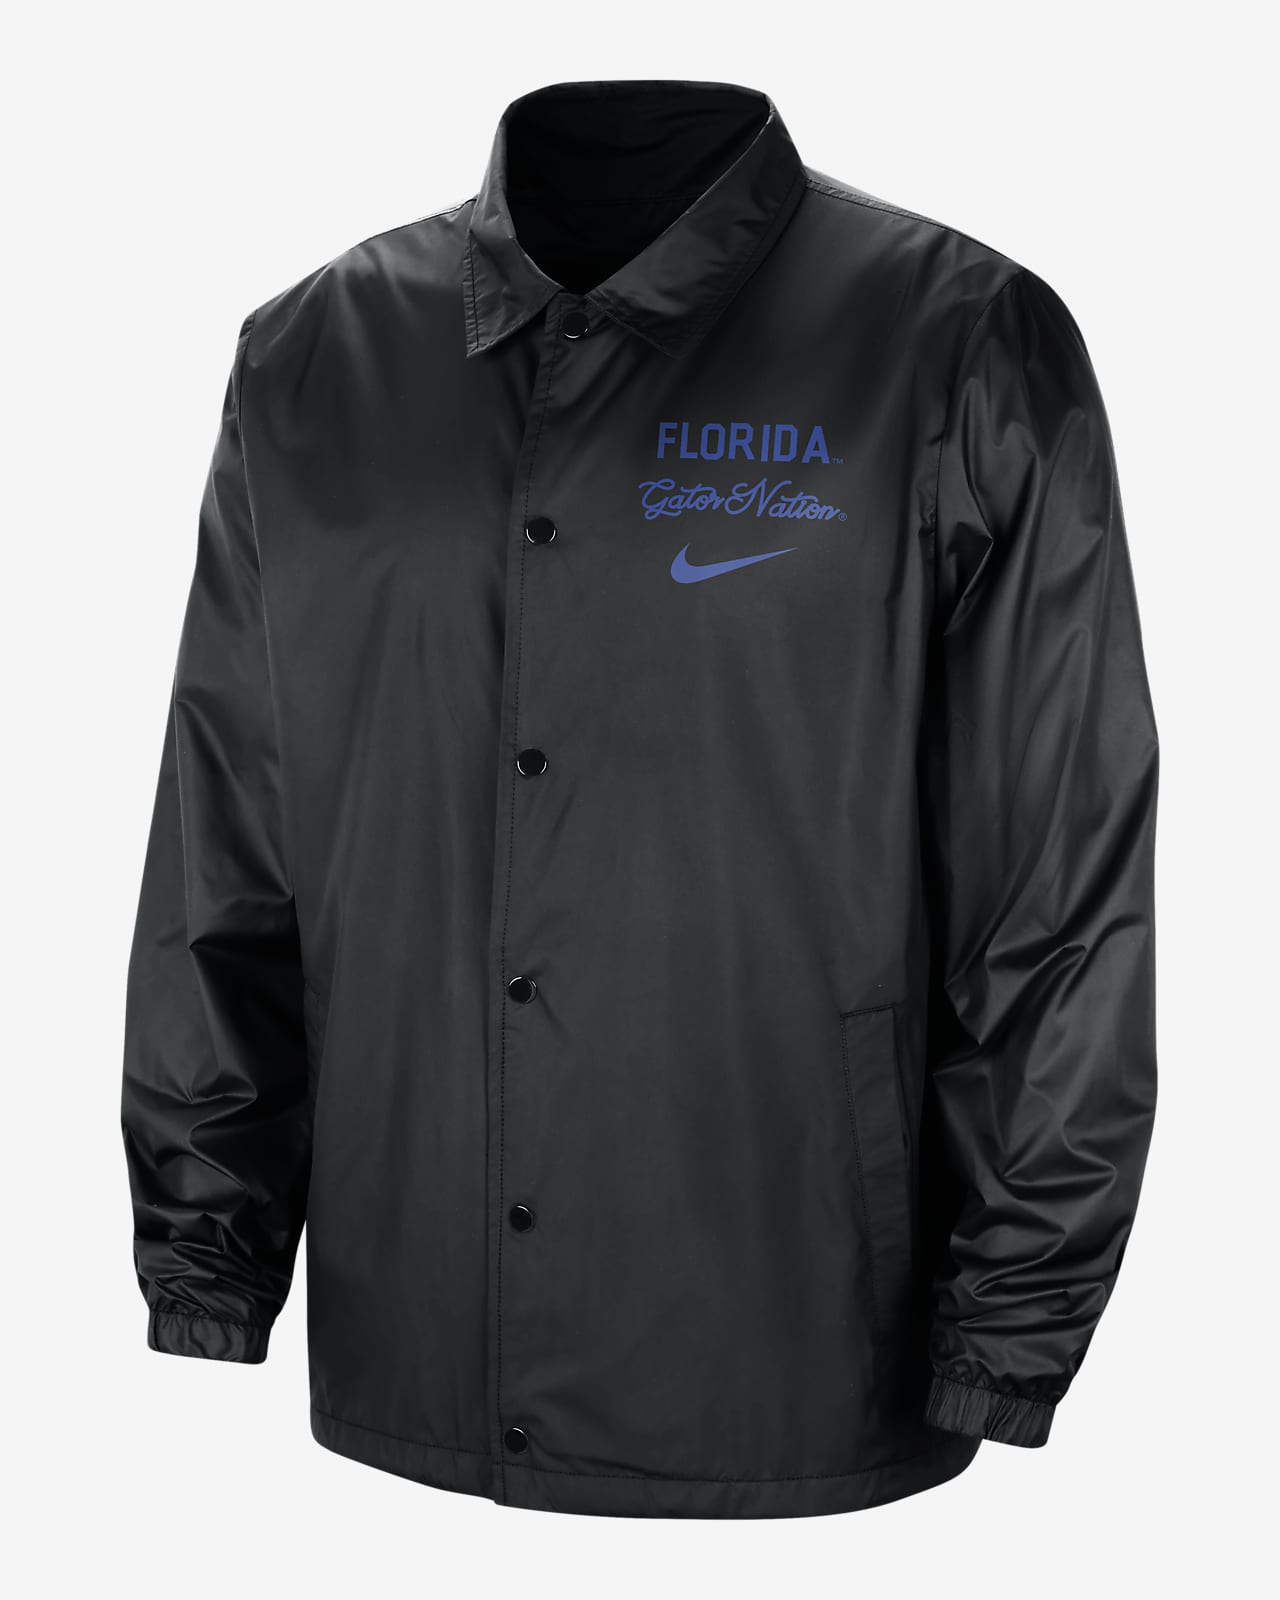 Florida Men's Nike College Jacket